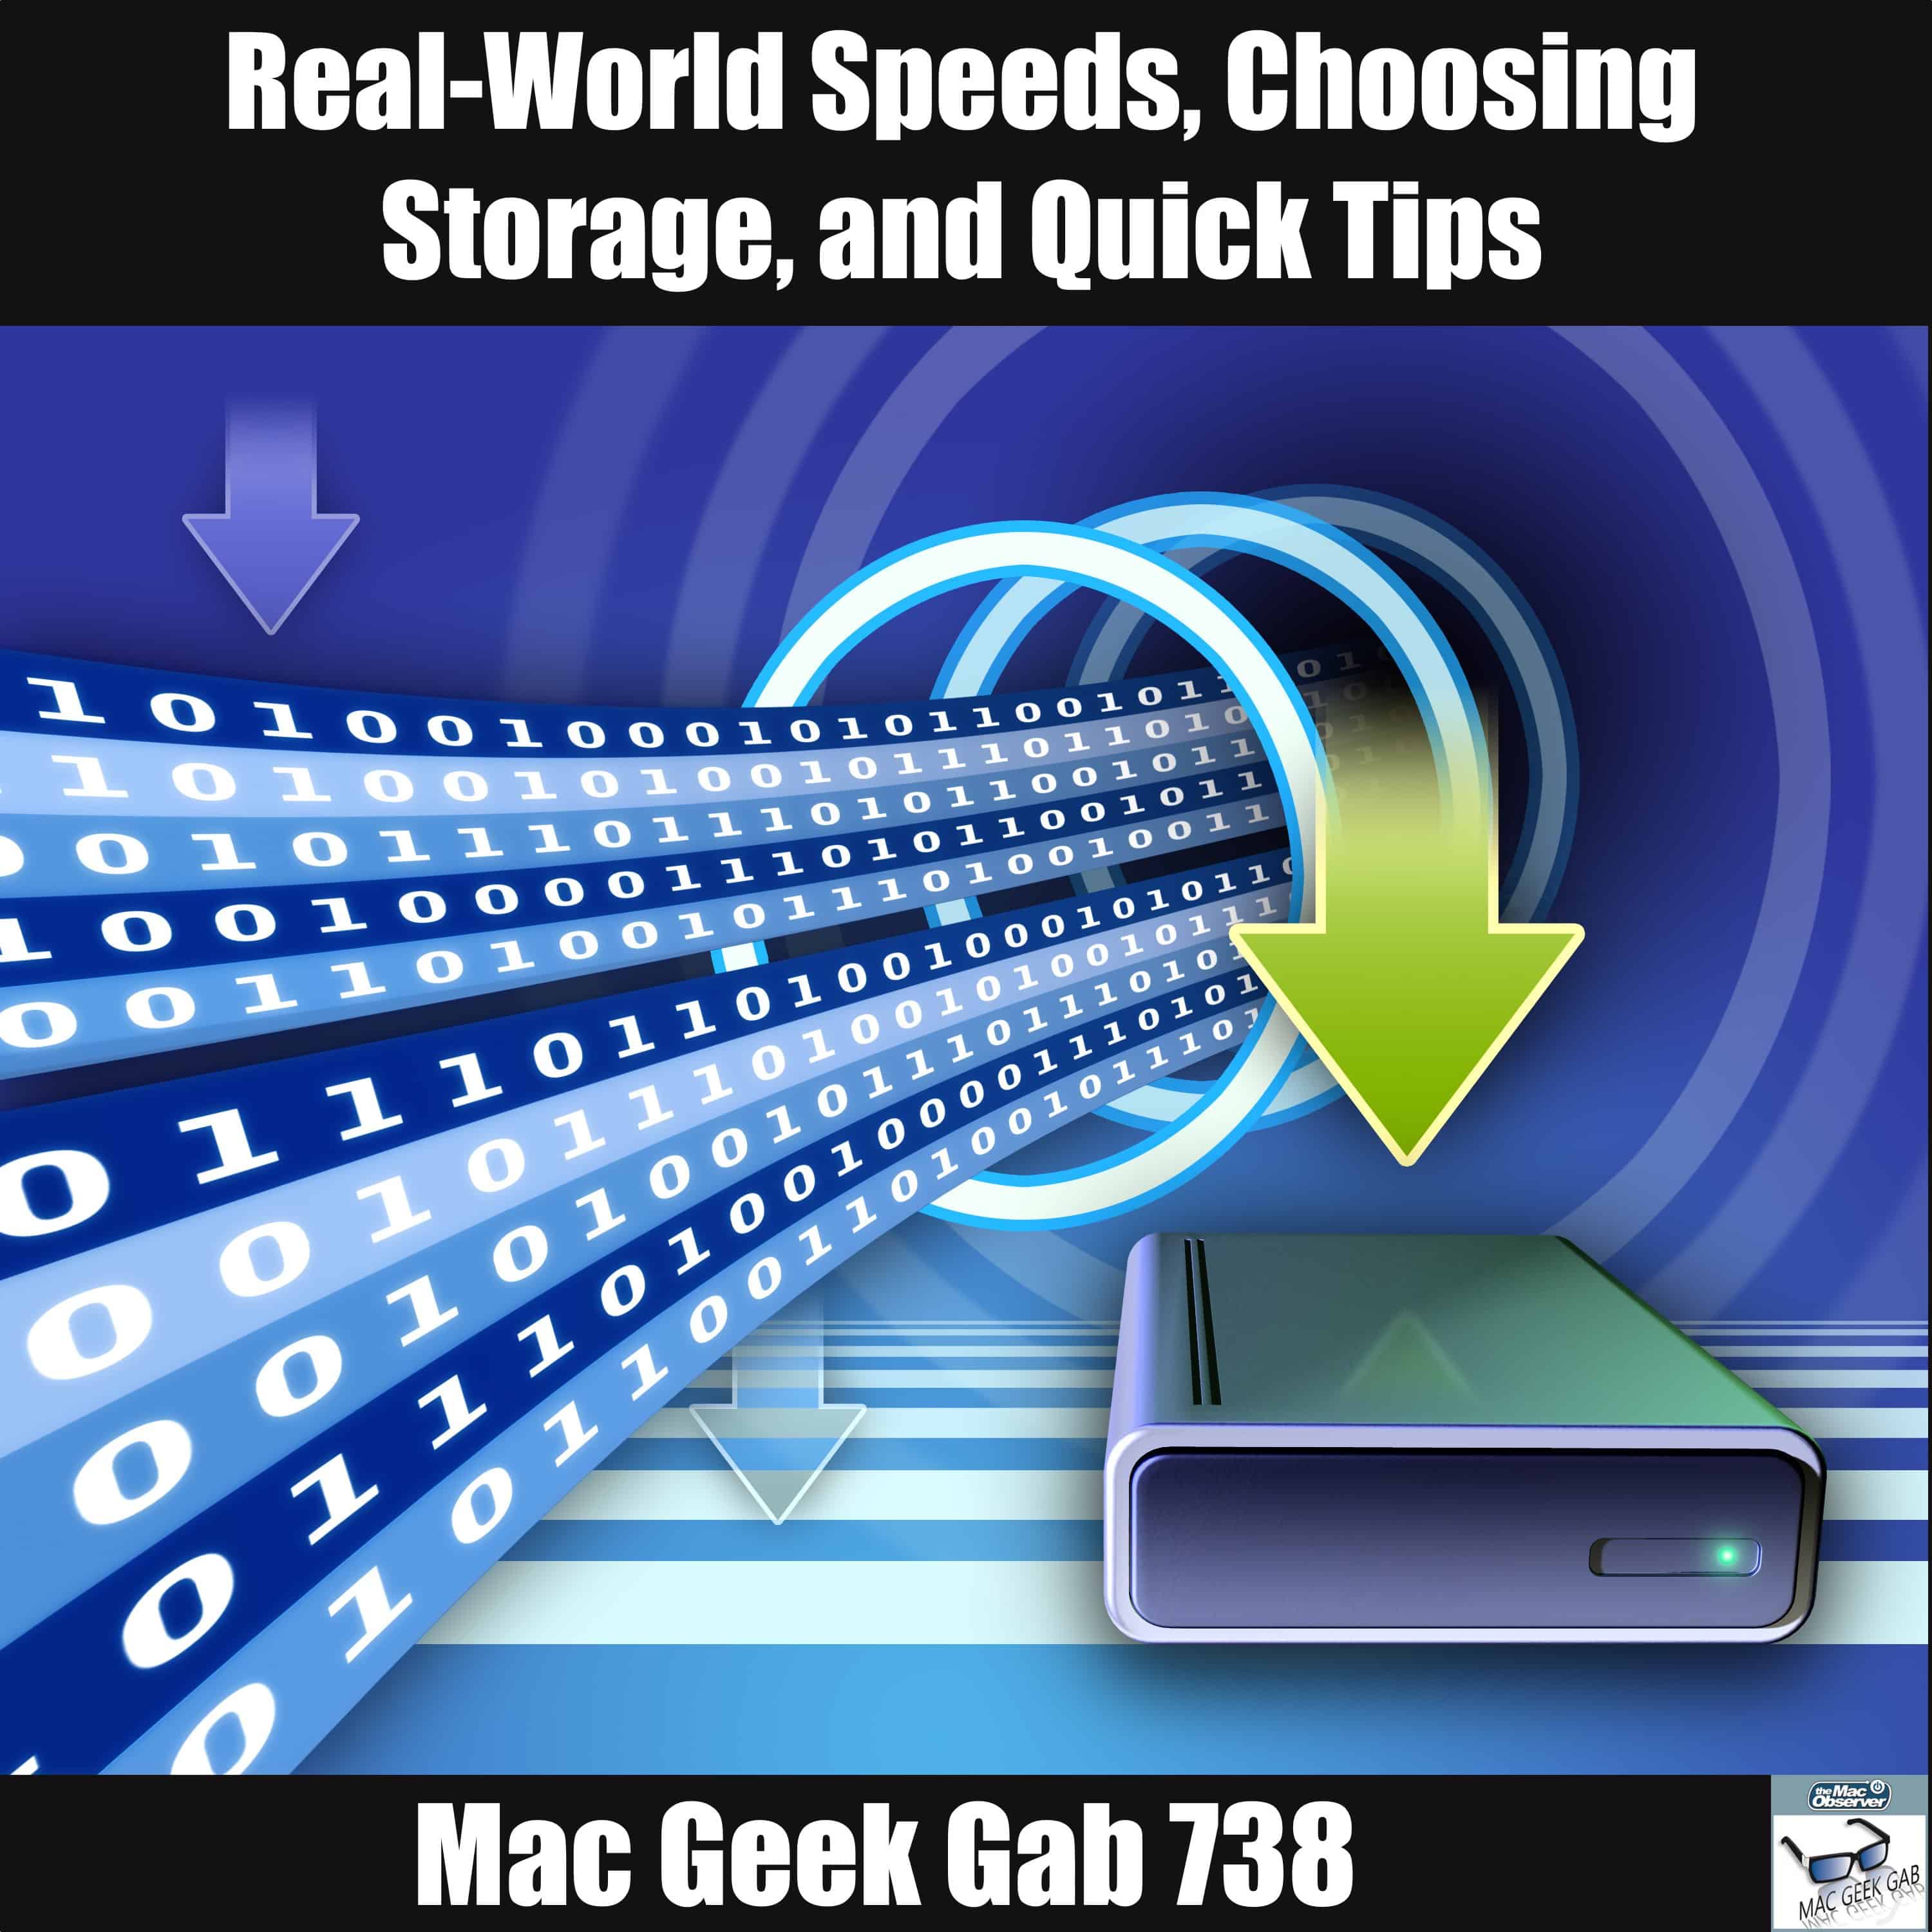 Real-World Speeds, Choosing Storage, and Quick Tips – Mac Geek Gab 738